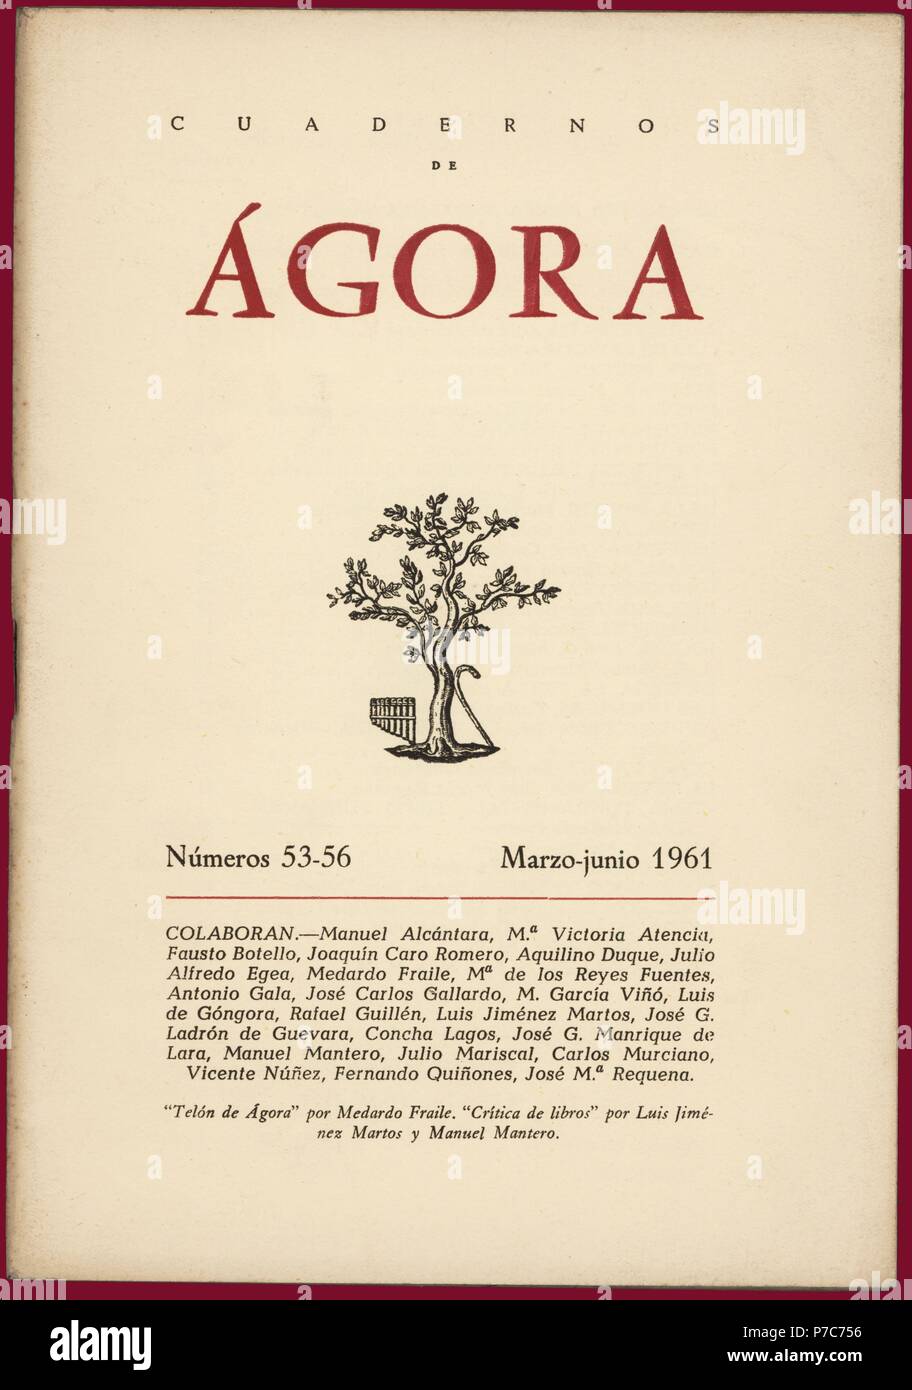 Portada de la revista Cuadernos de Ágora. Madrid, 1961. Stock Photo